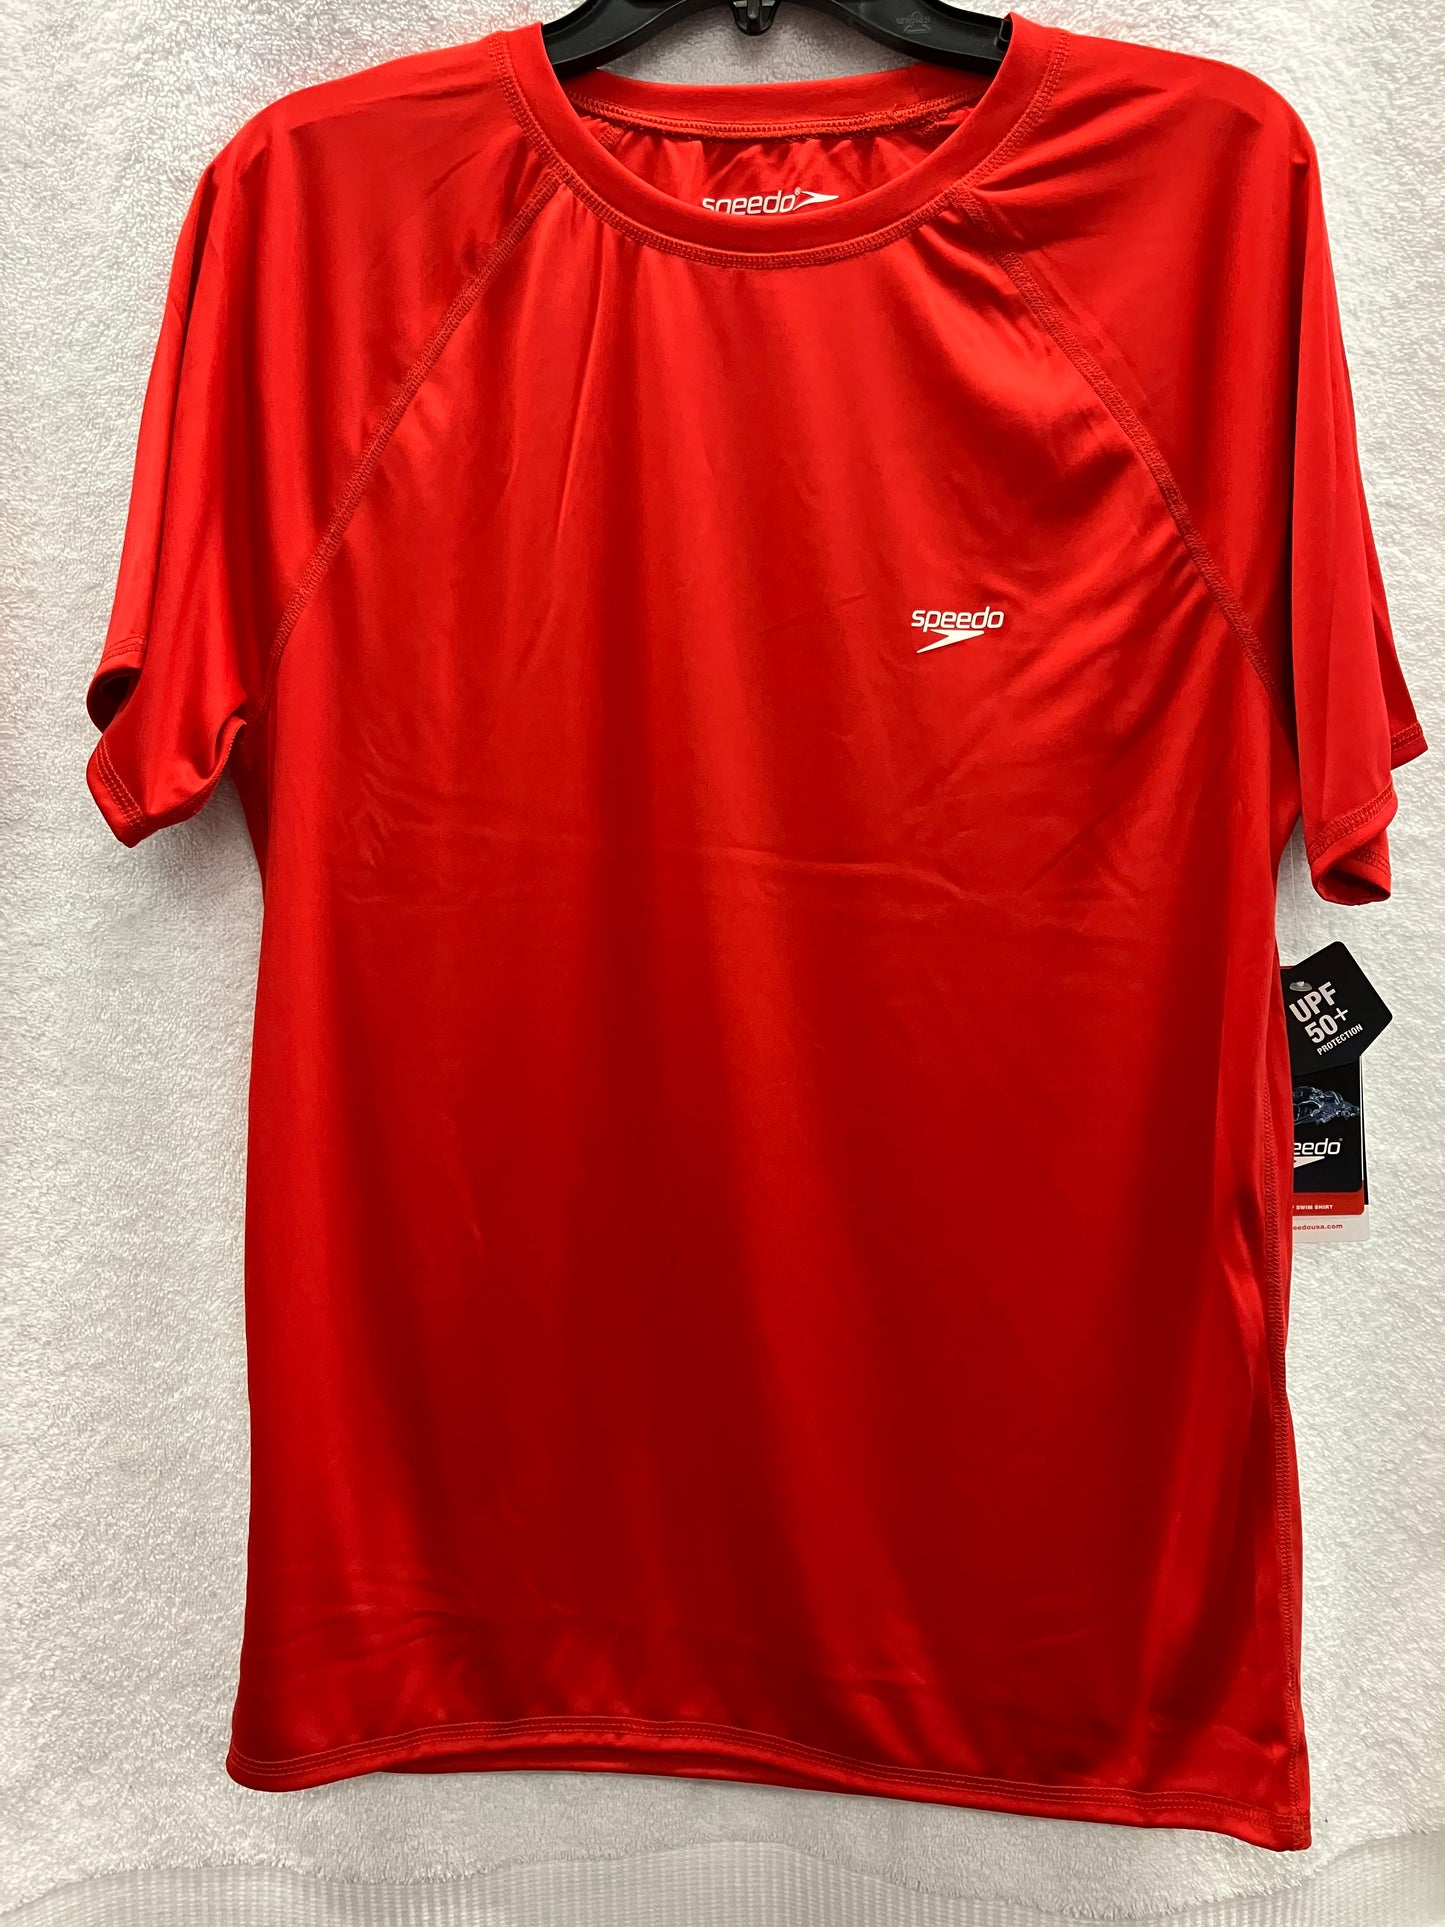 Speedo Red Easy Swim Shirt Size Medium